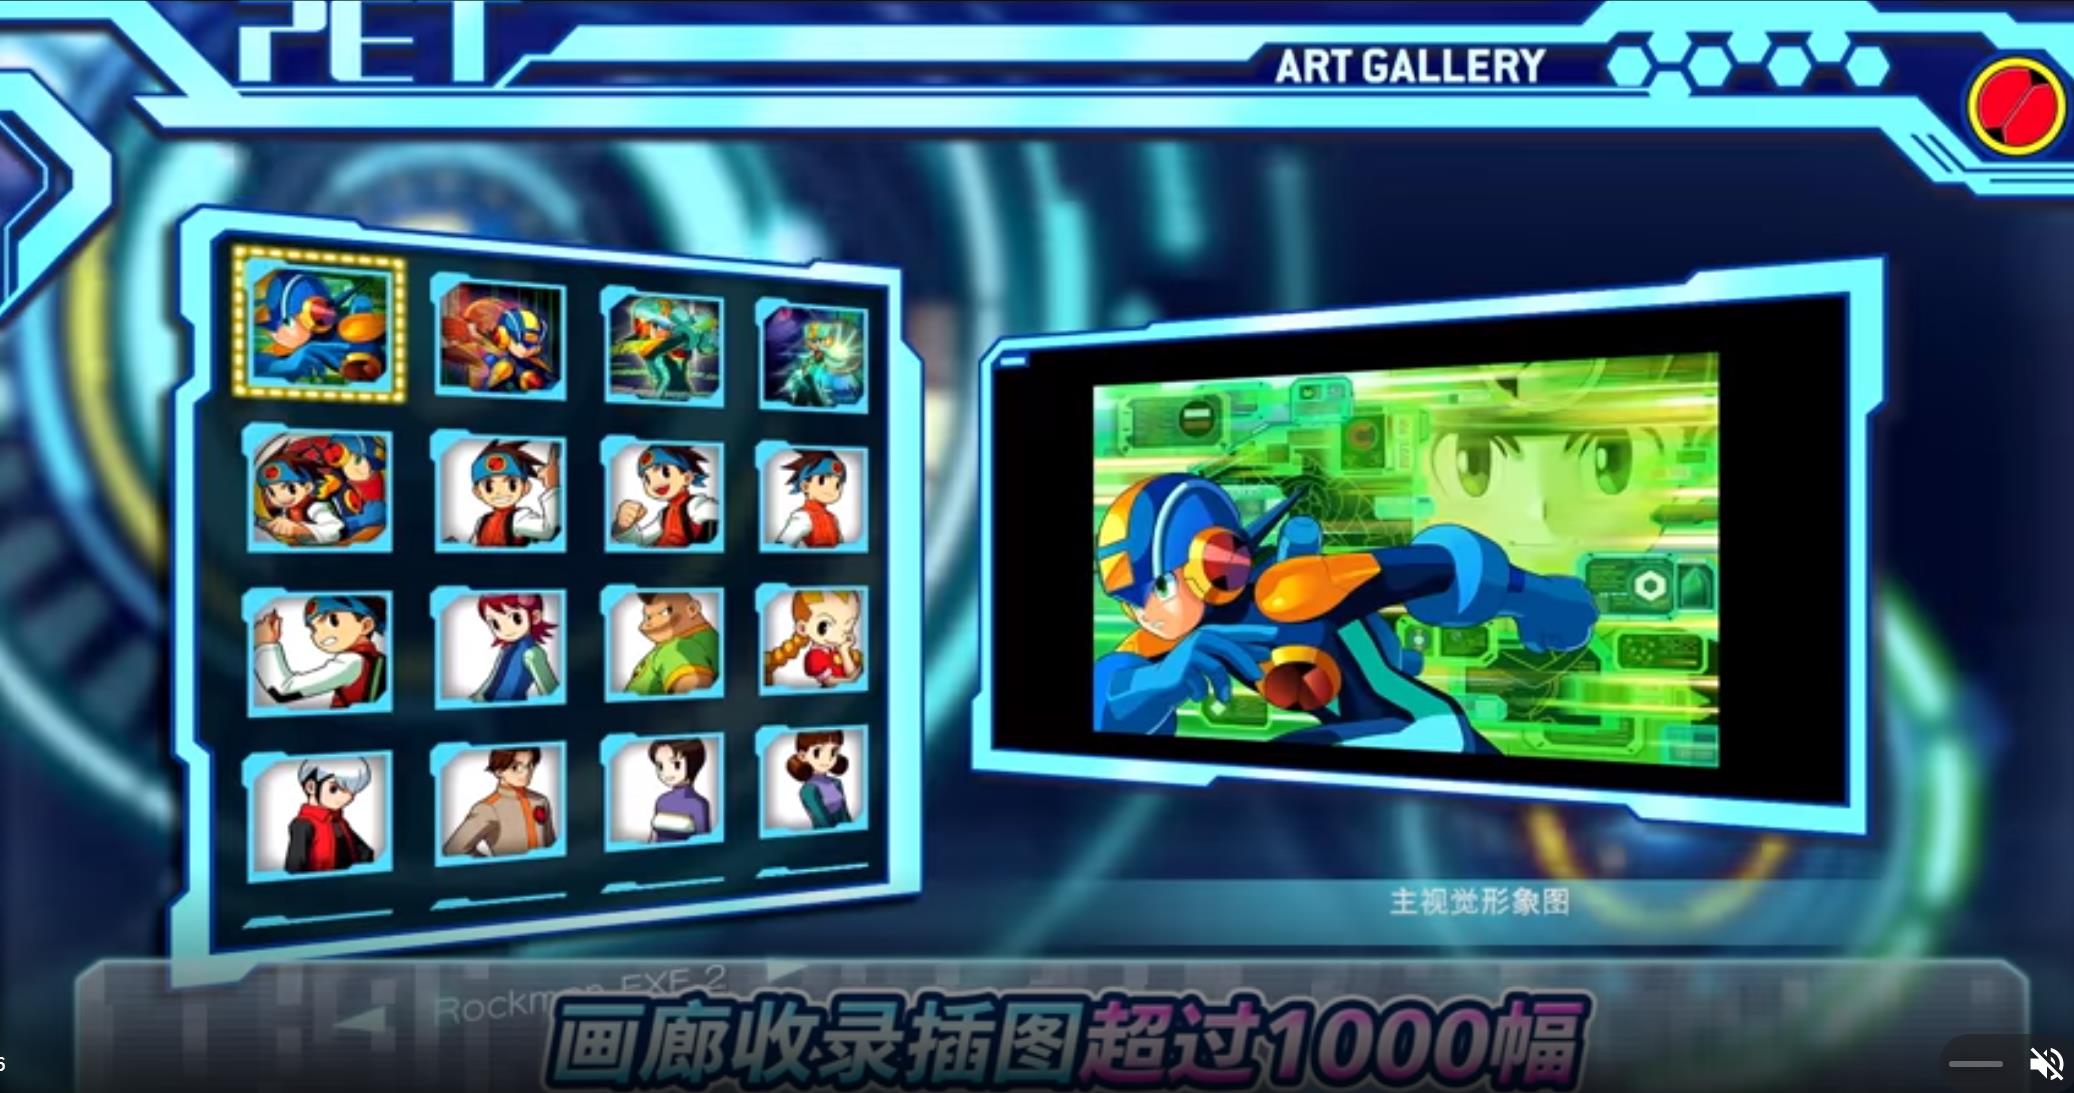 洛克人EXE合集2/Mega Man Battle Network Legacy Collection Vol 2 中文网盘下载-二次元共享站2cyshare